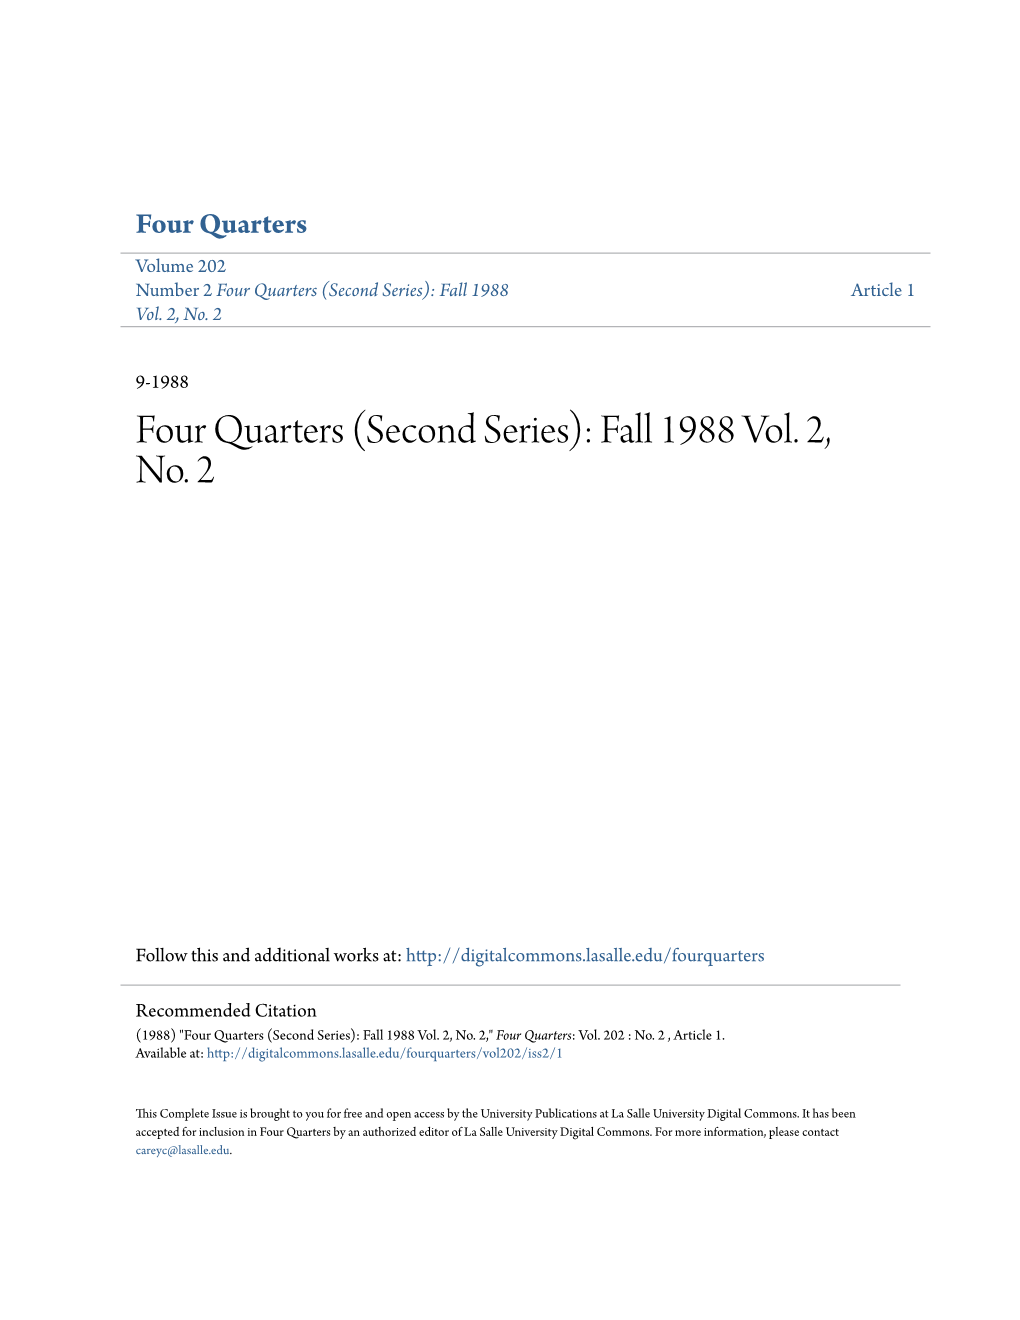 Four Quarters Volume 202 Number 2 Four Quarters (Second Series): Fall 1988 Article 1 Vol